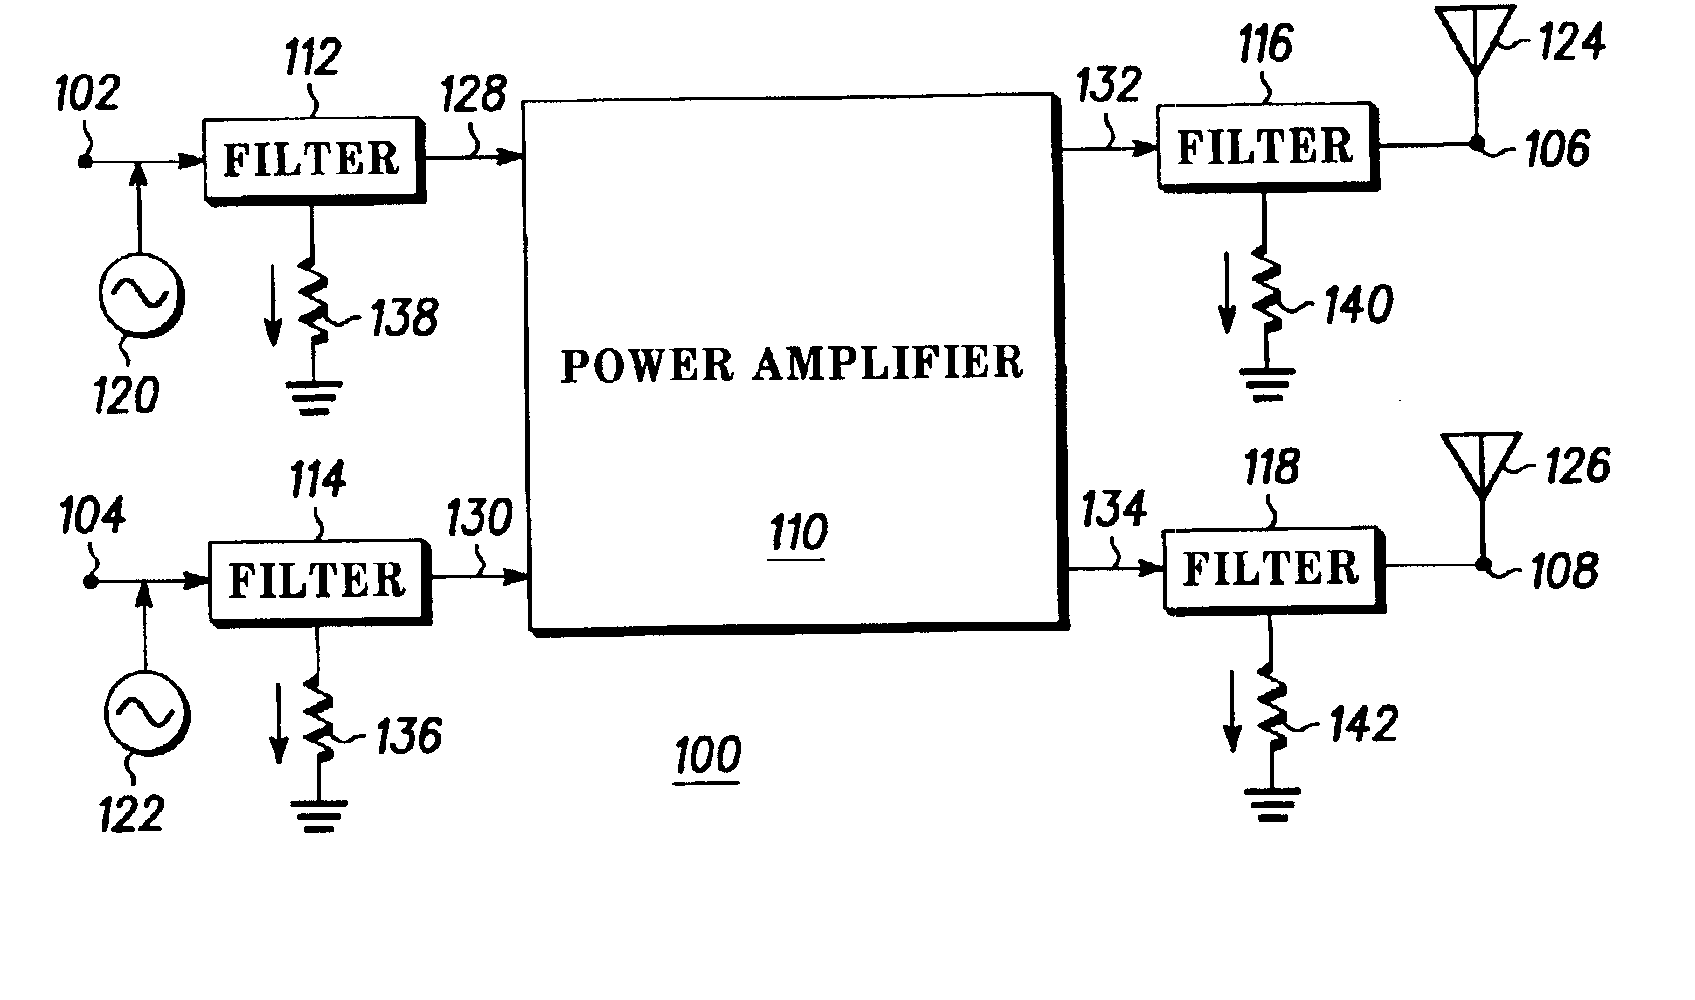 Bidirectional distributed amplifier